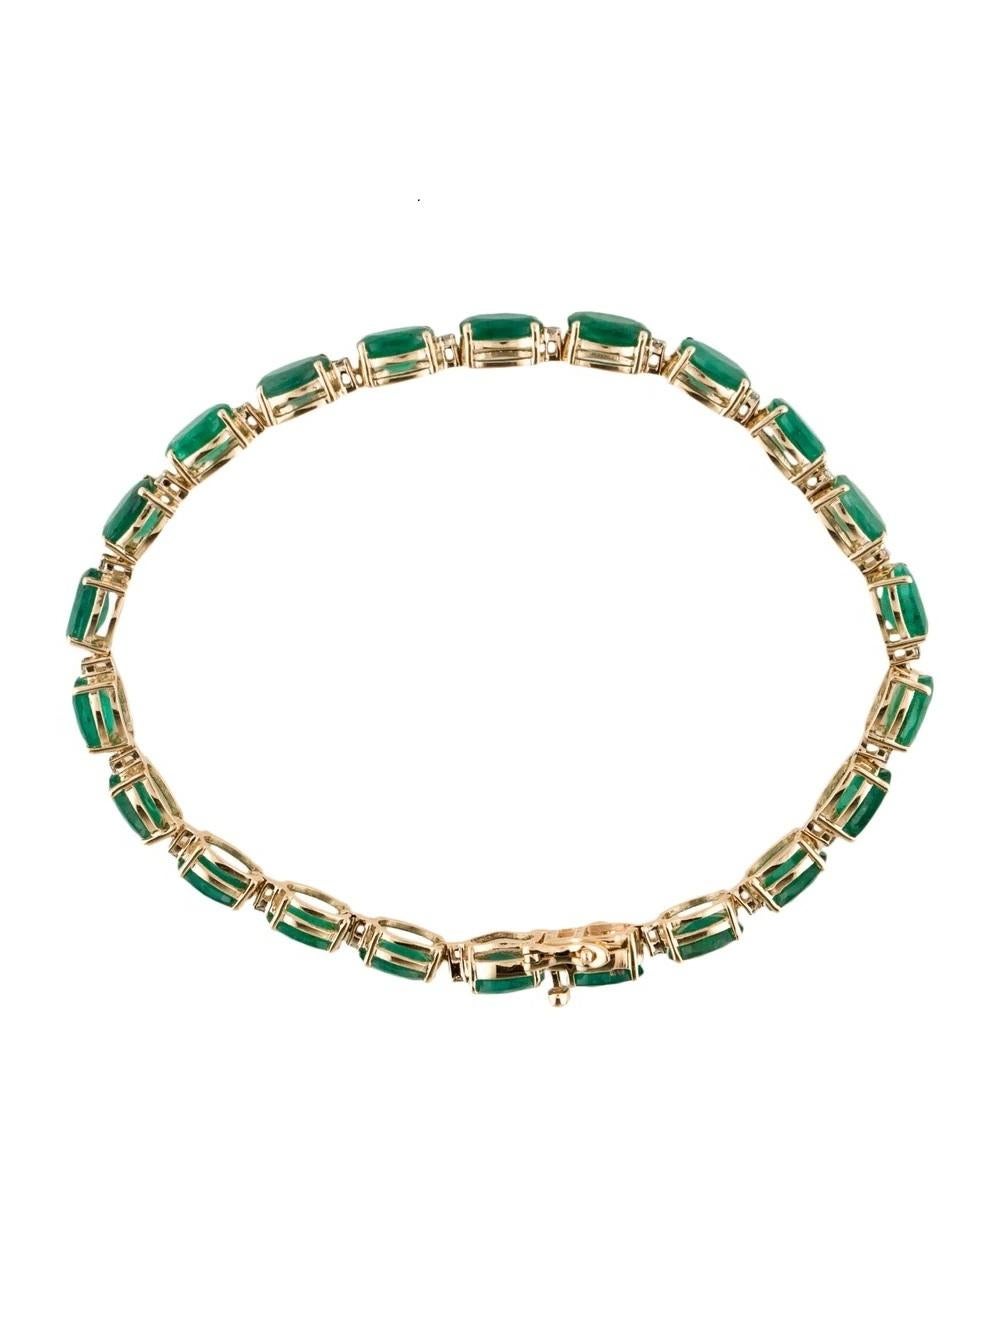 Oval Cut 14K Emerald Diamond Link Bracelet 14.96ctw - Green Gemstone Yellow Gold Jewelry For Sale